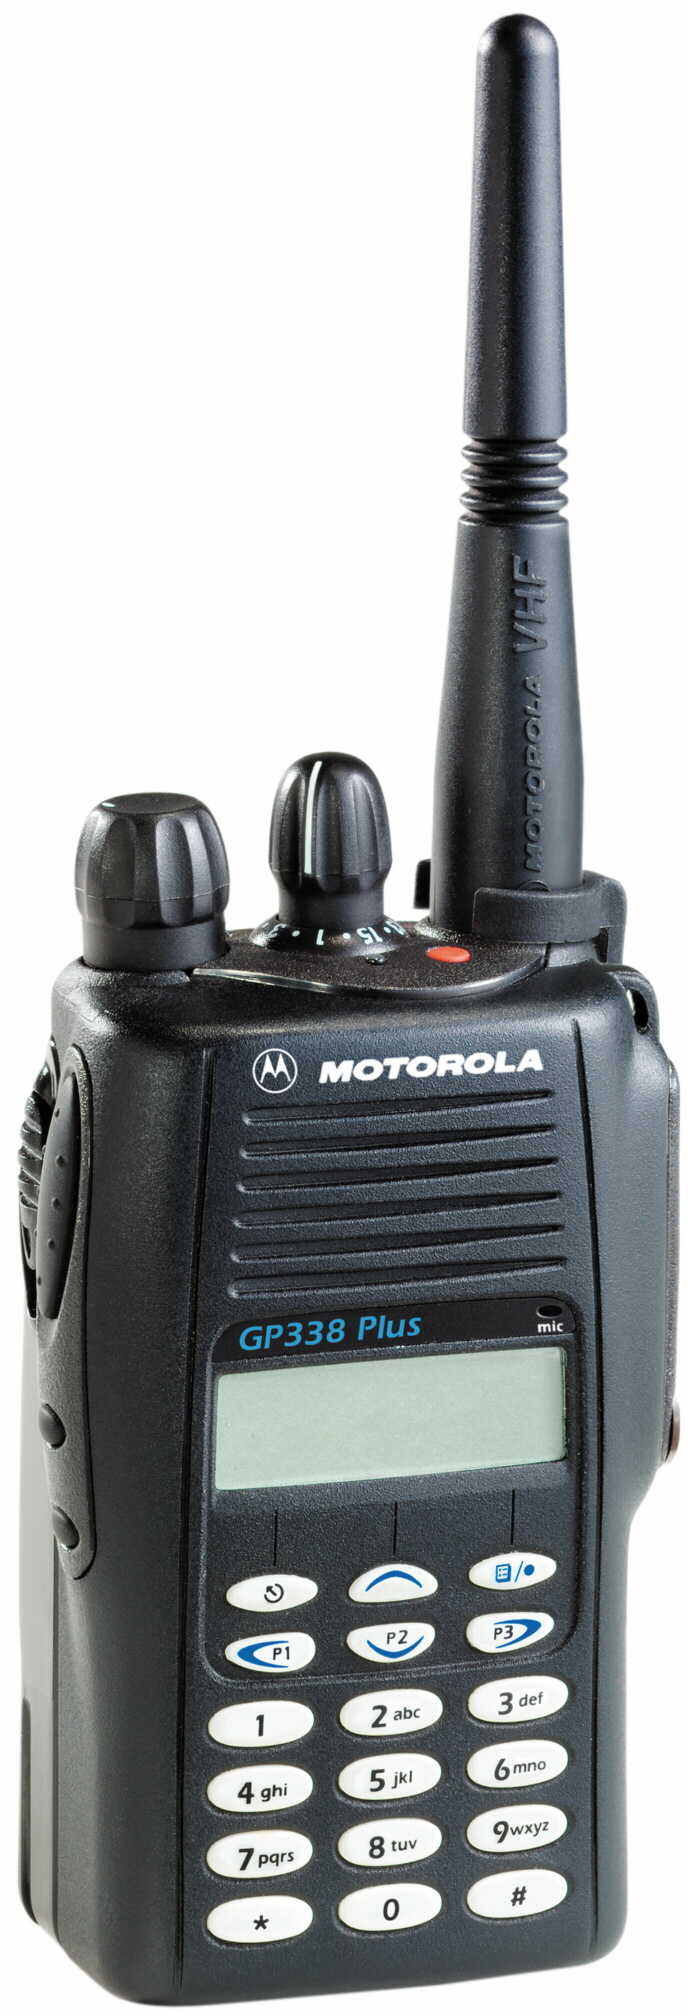 Motorola Gp338